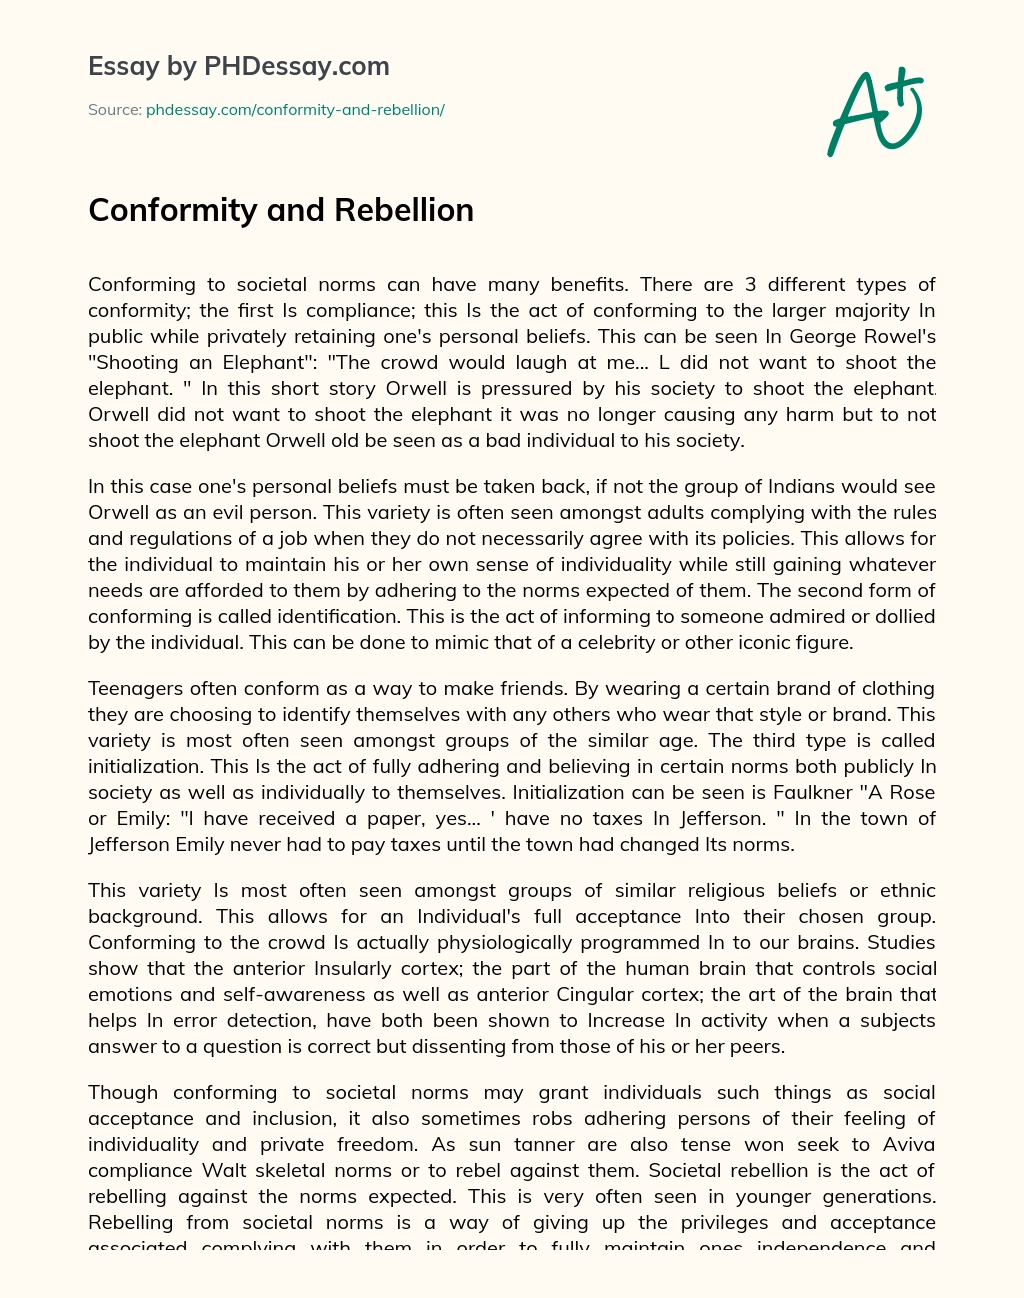 Conformity and Rebellion essay